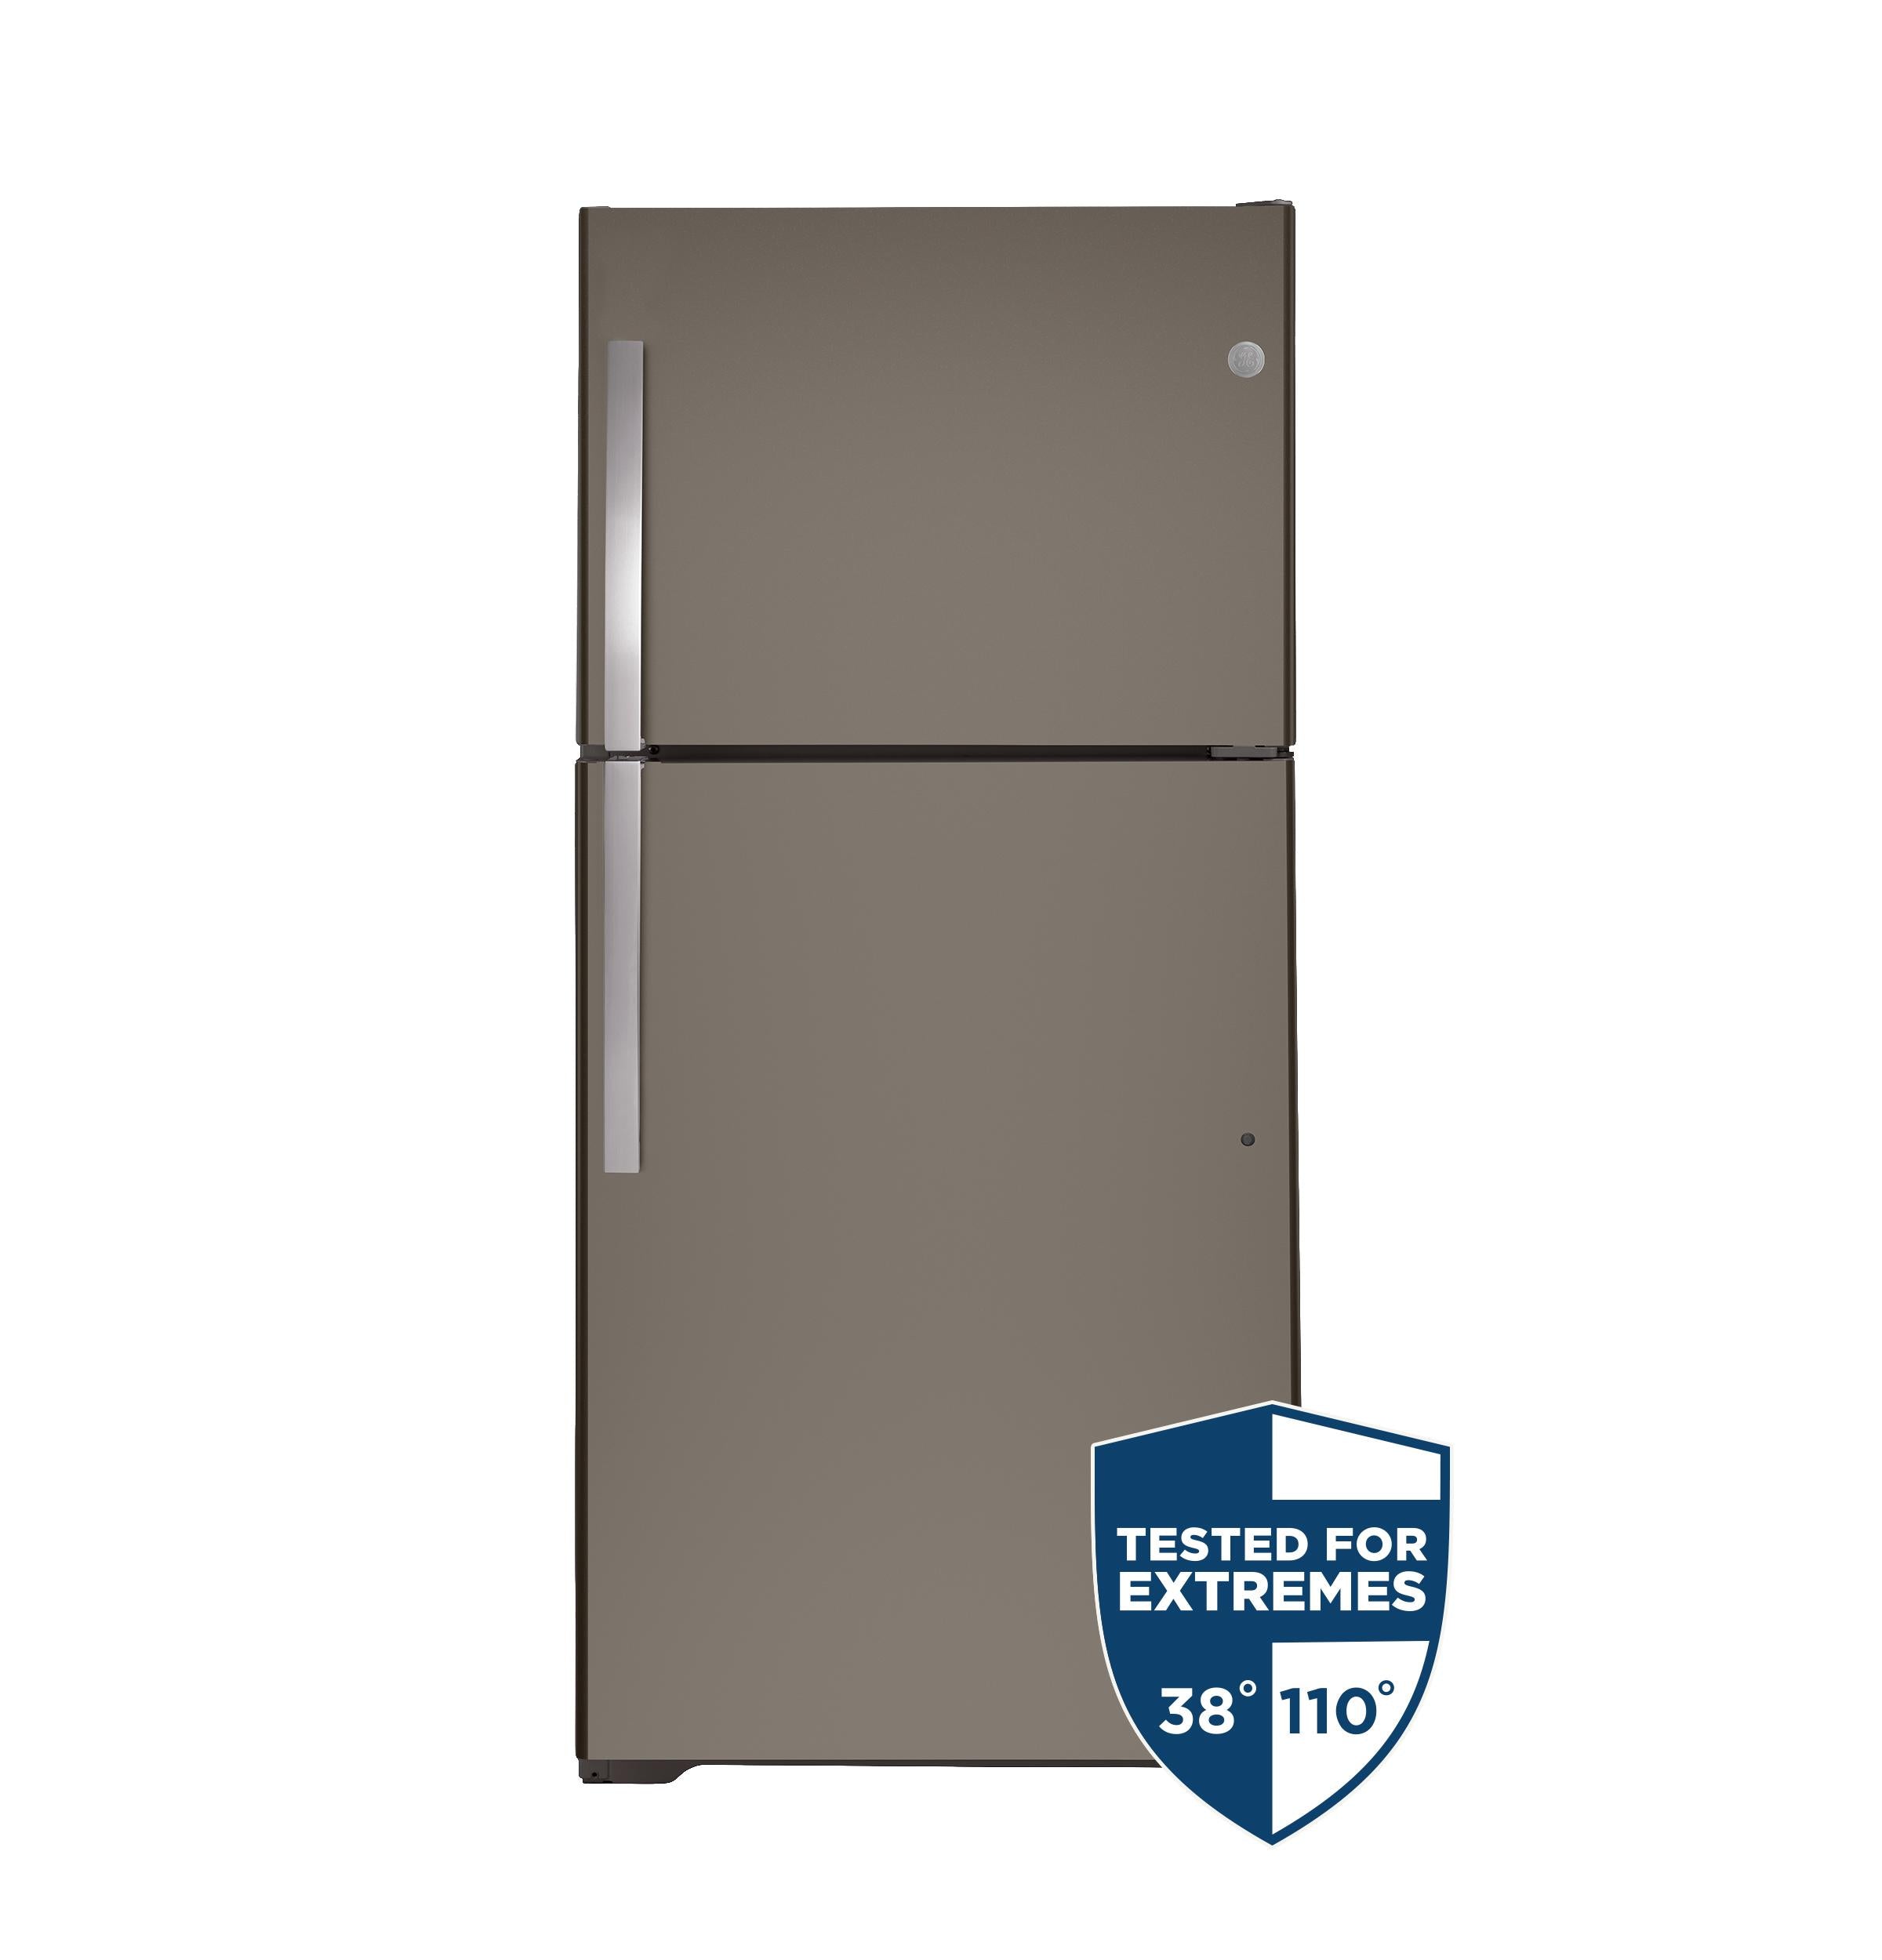 GE® 21.9 Cu. Ft. Top-Freezer Refrigerator